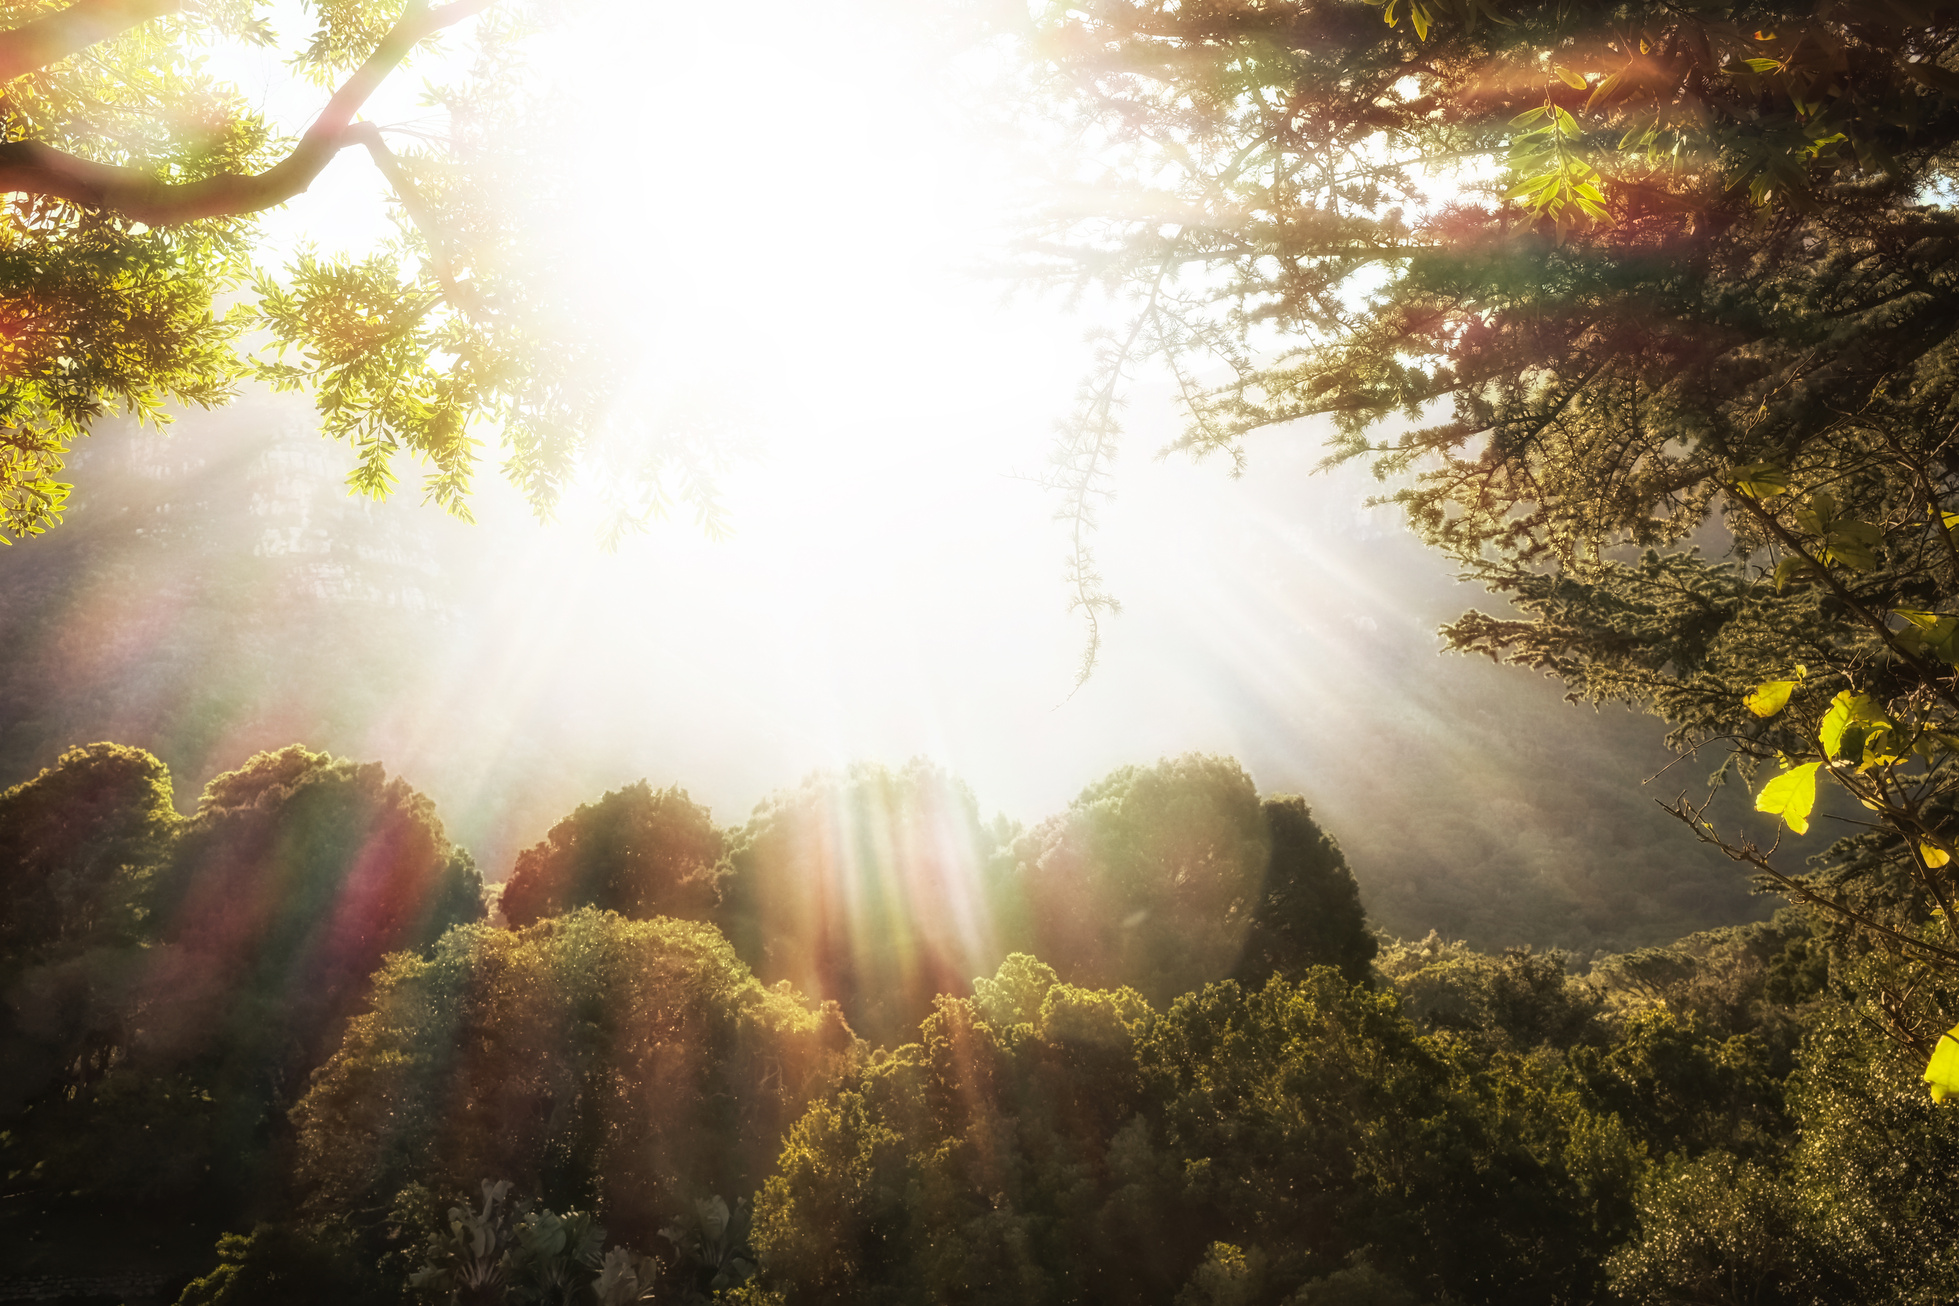 Garden of Eden: idyllic woodland with heavenly sunbeams